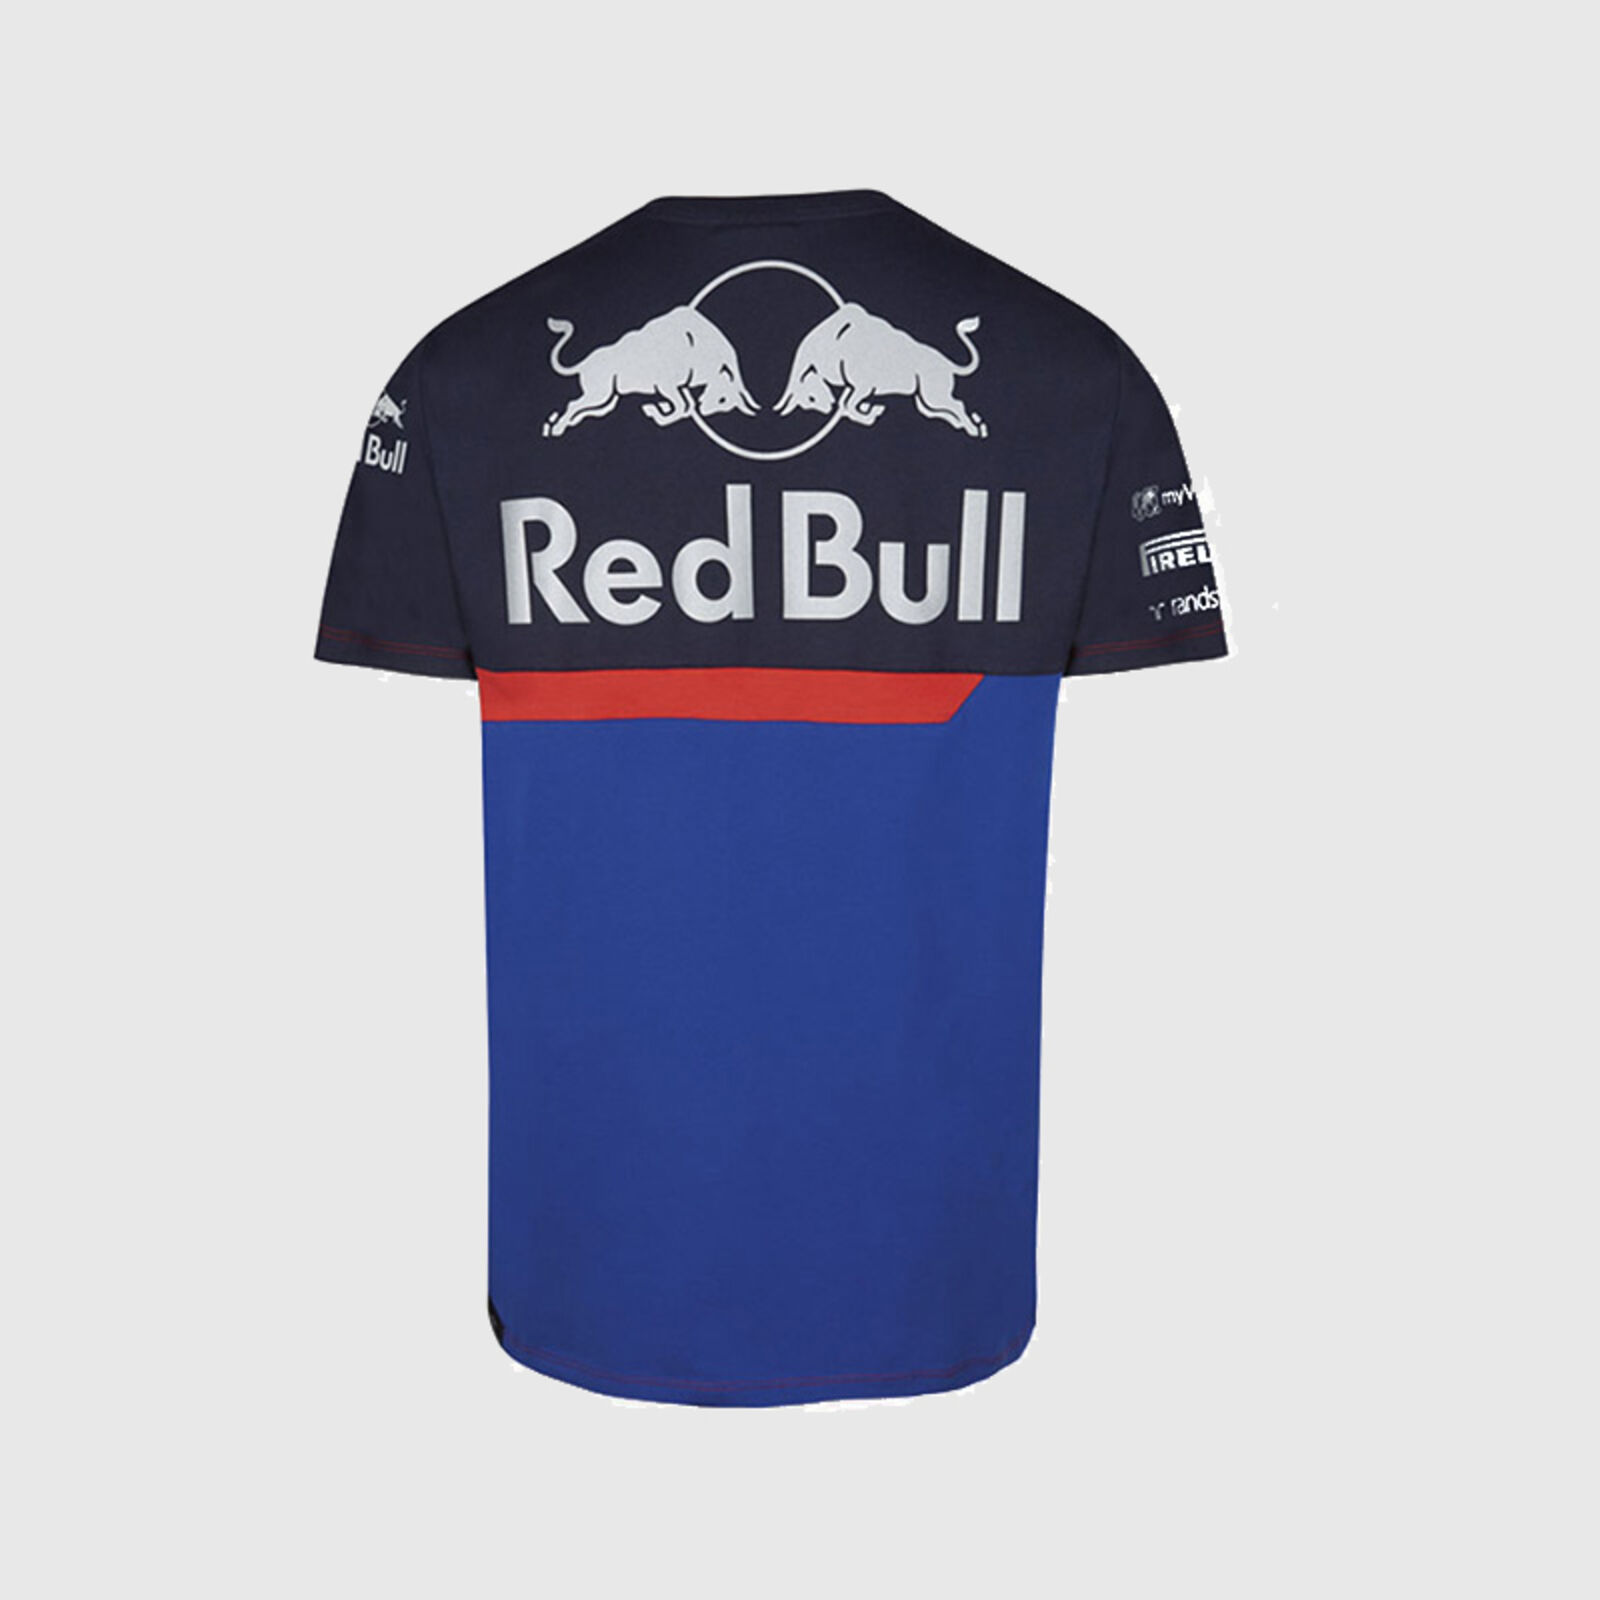 Oferta Especialidad Bolsa 2019 Team T-Shirt - Toro Rosso | Fuel For Fans